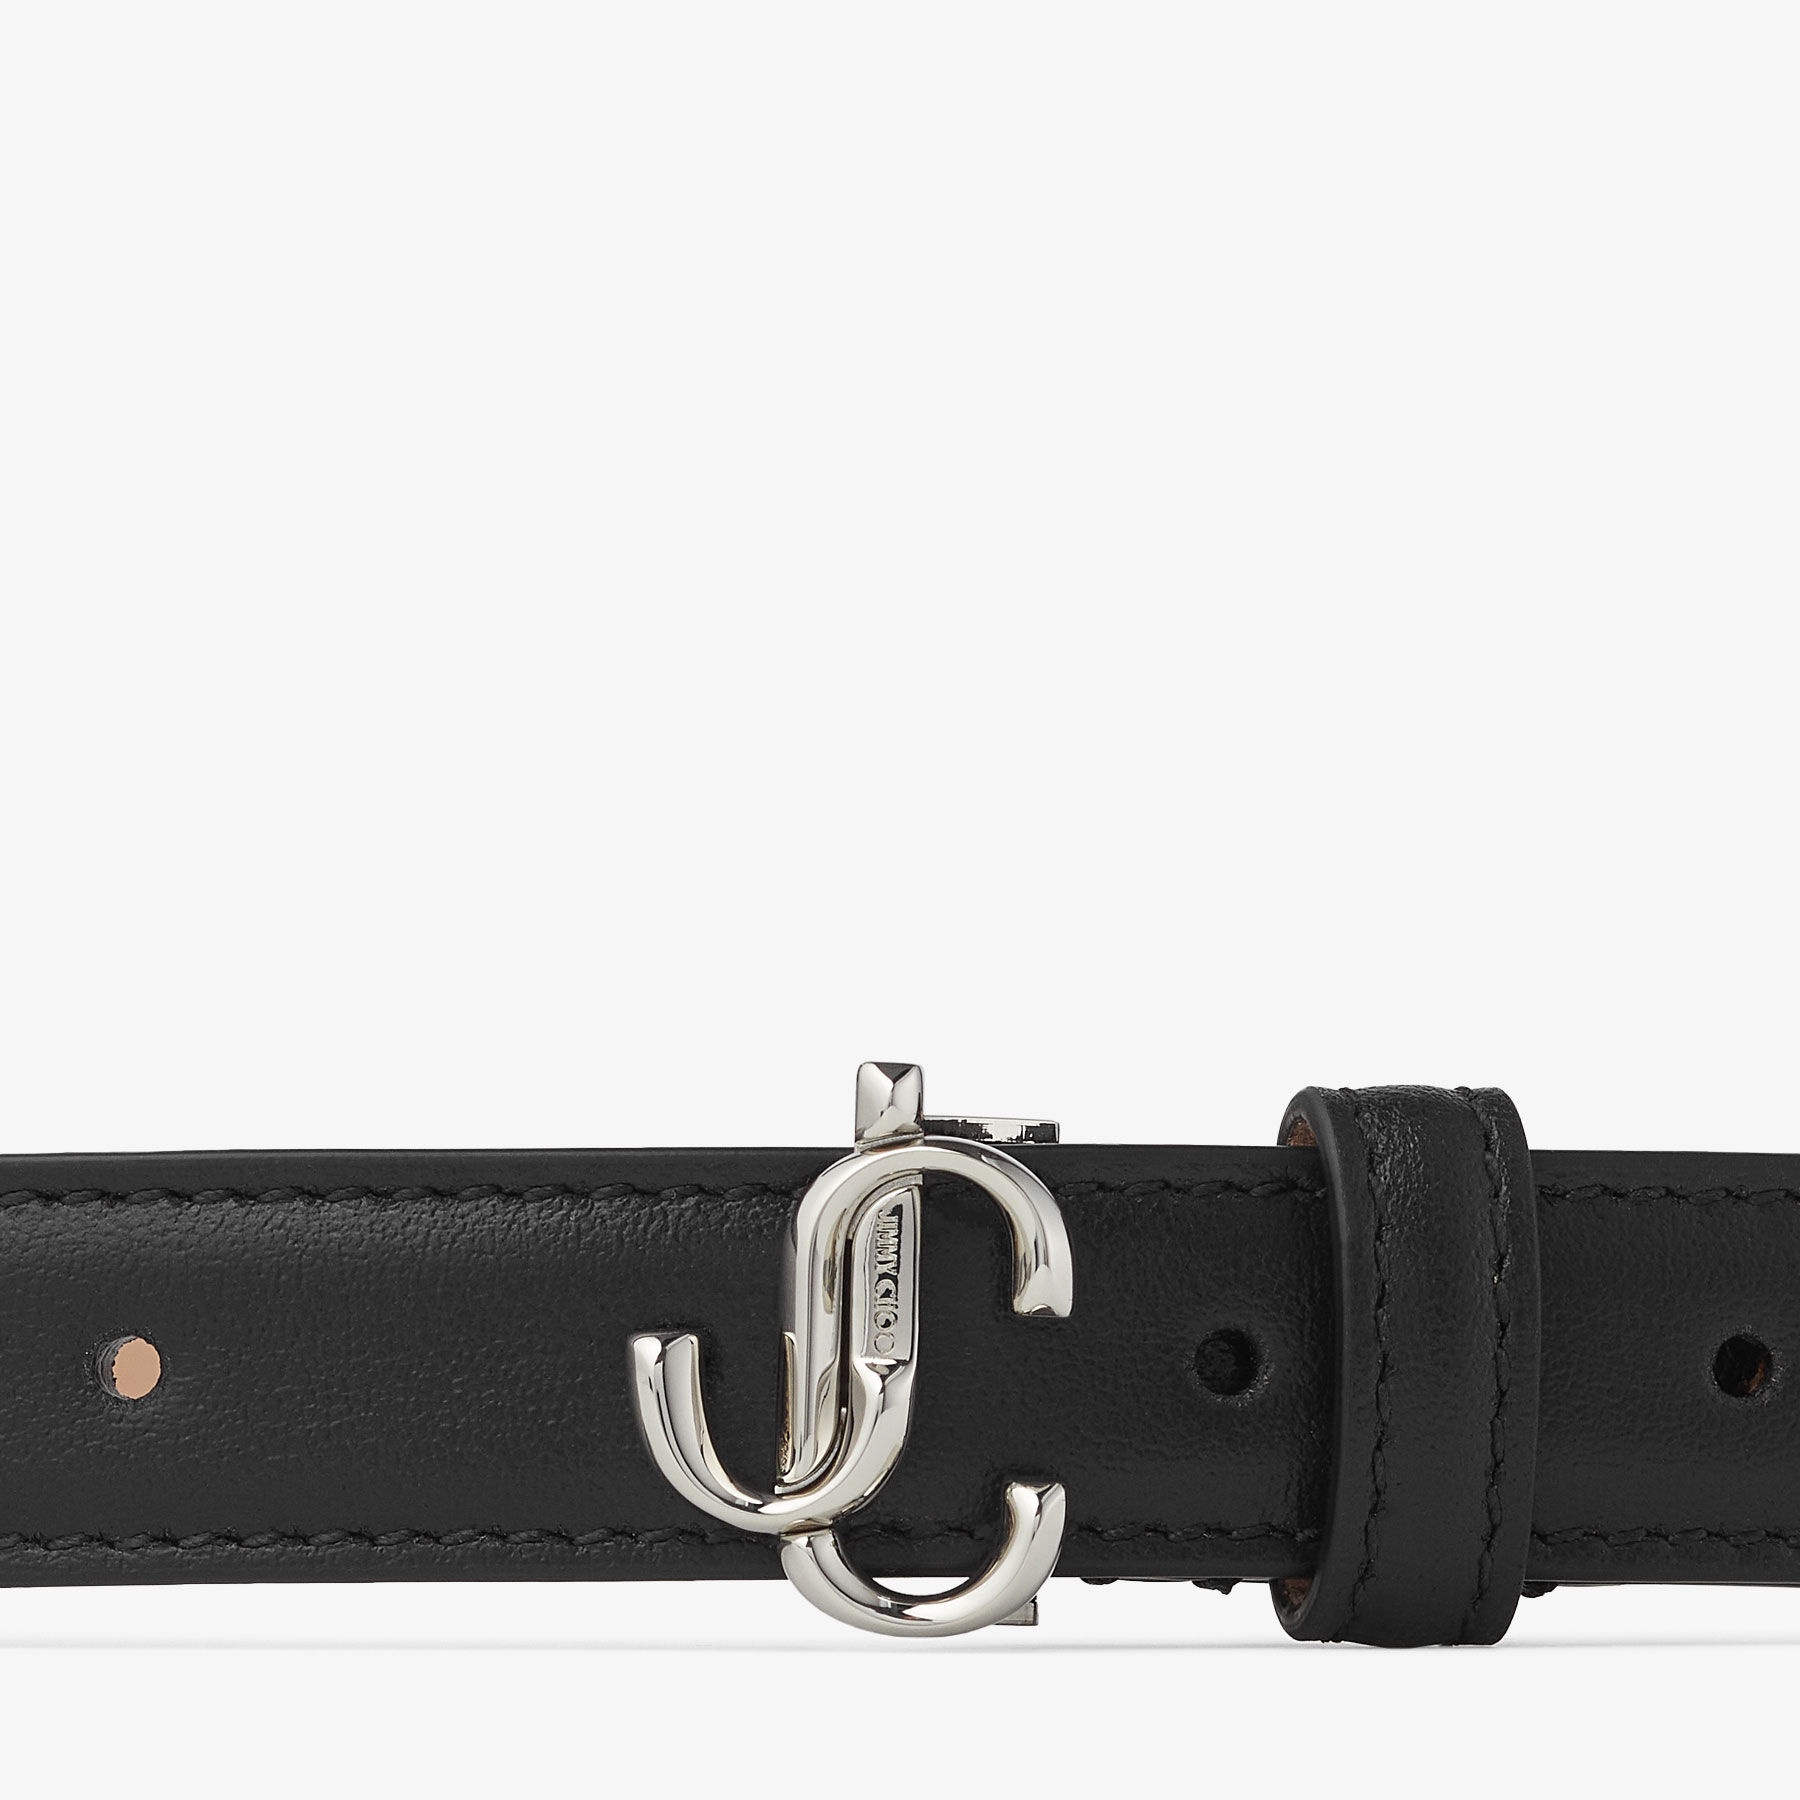 Mini Helina
Black Smooth Leather Mini Belt - 2